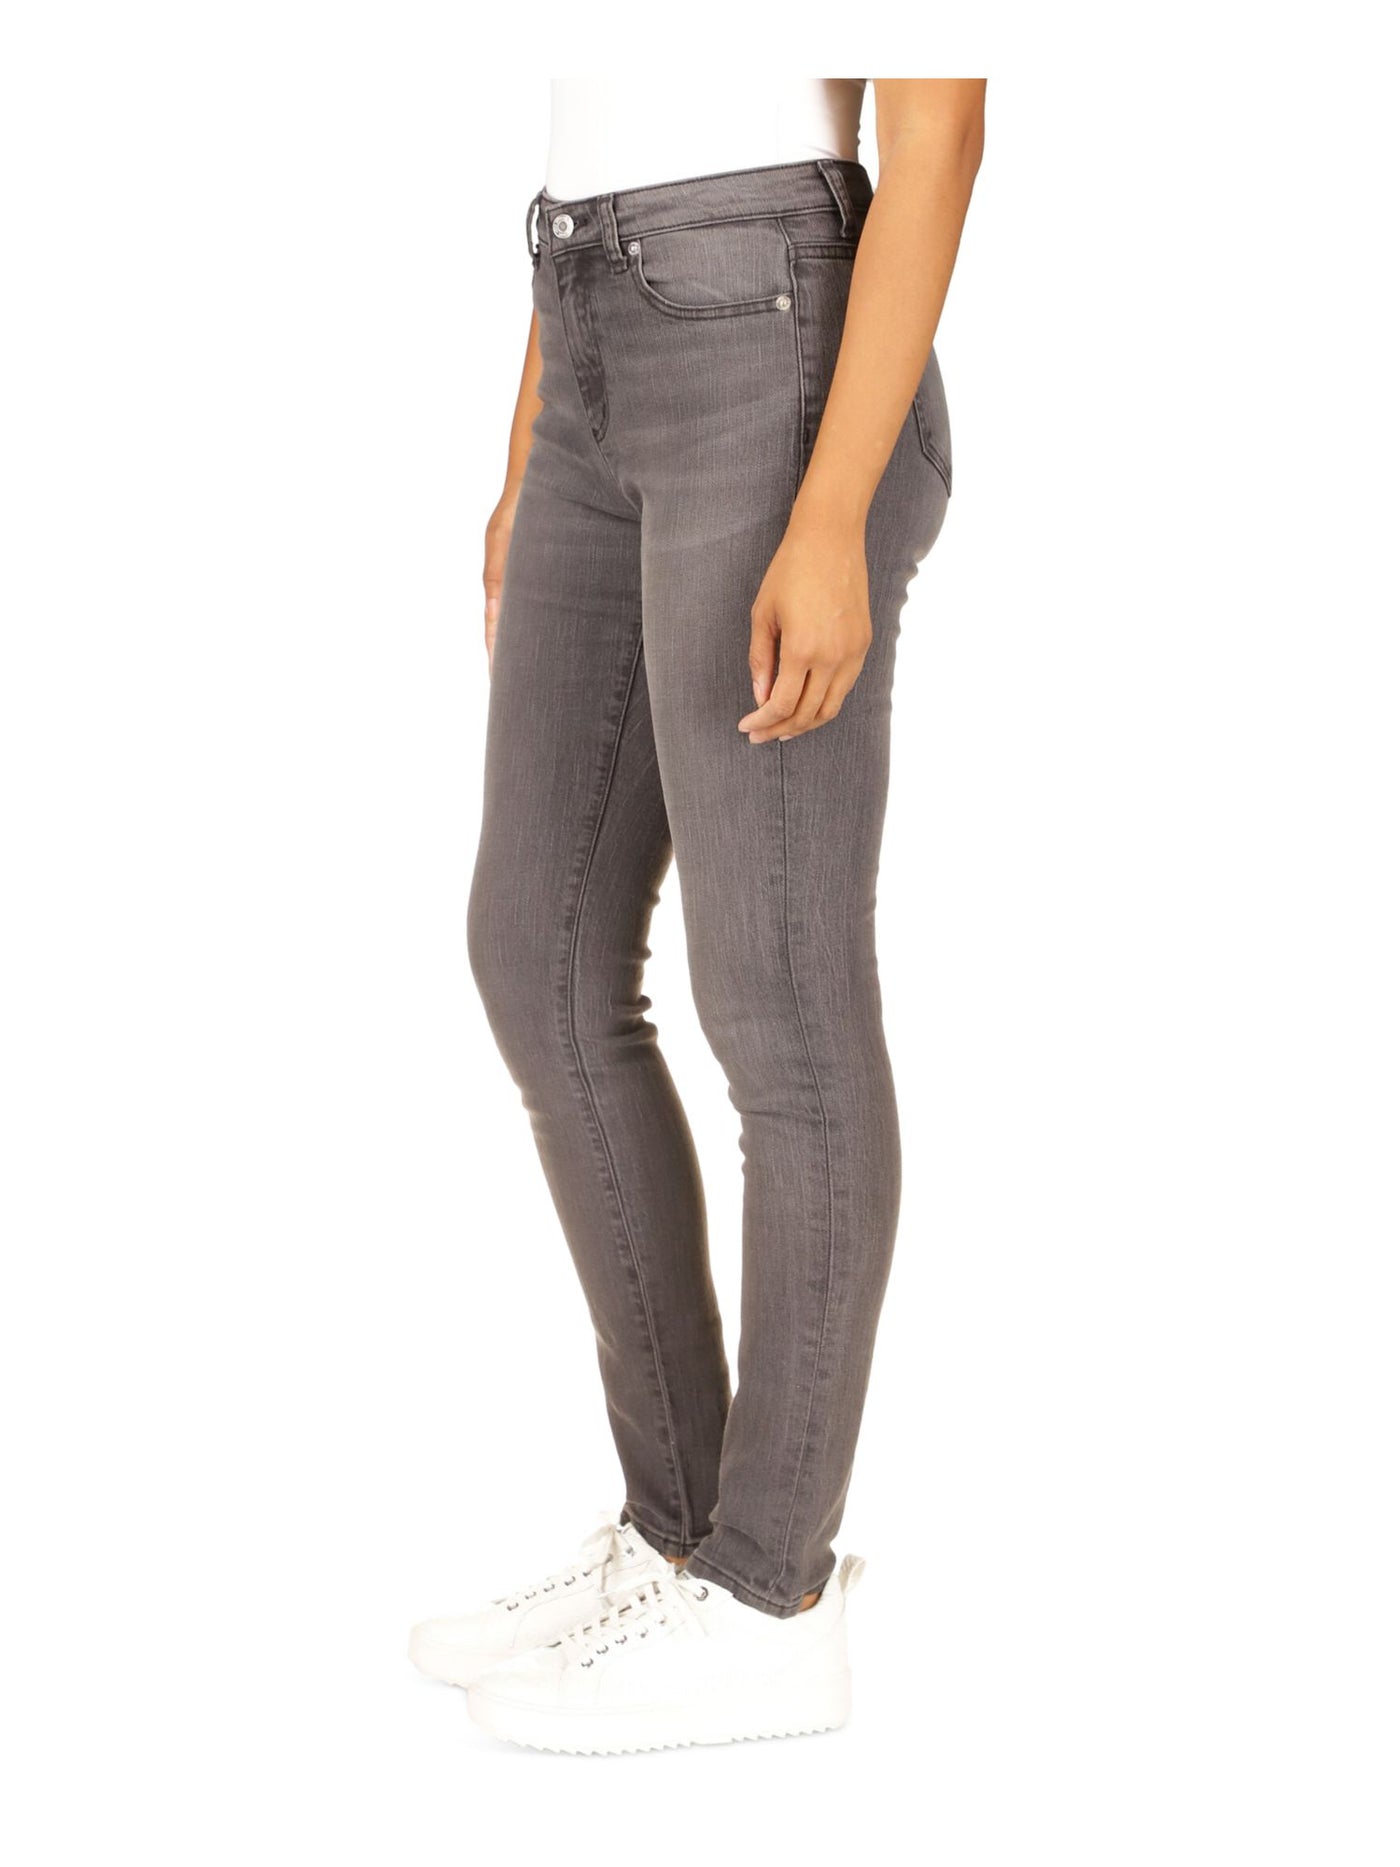 MICHAEL KORS Womens Gray Zippered Pocketed Straight-leg Skinny High Waist Jeans Petites 8P